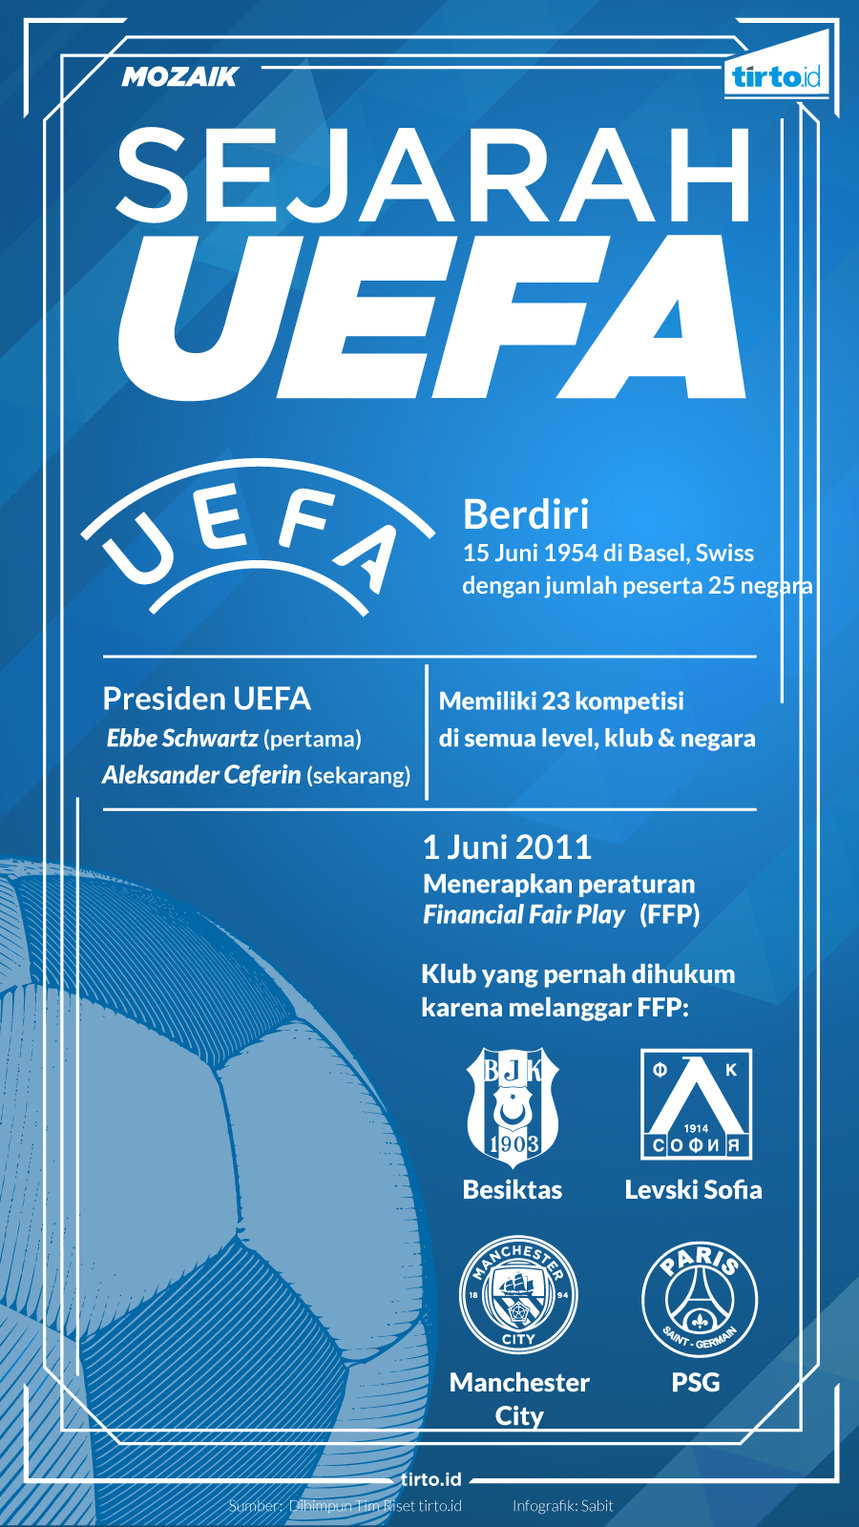 Infografik Mozaik Sejarah UEFA